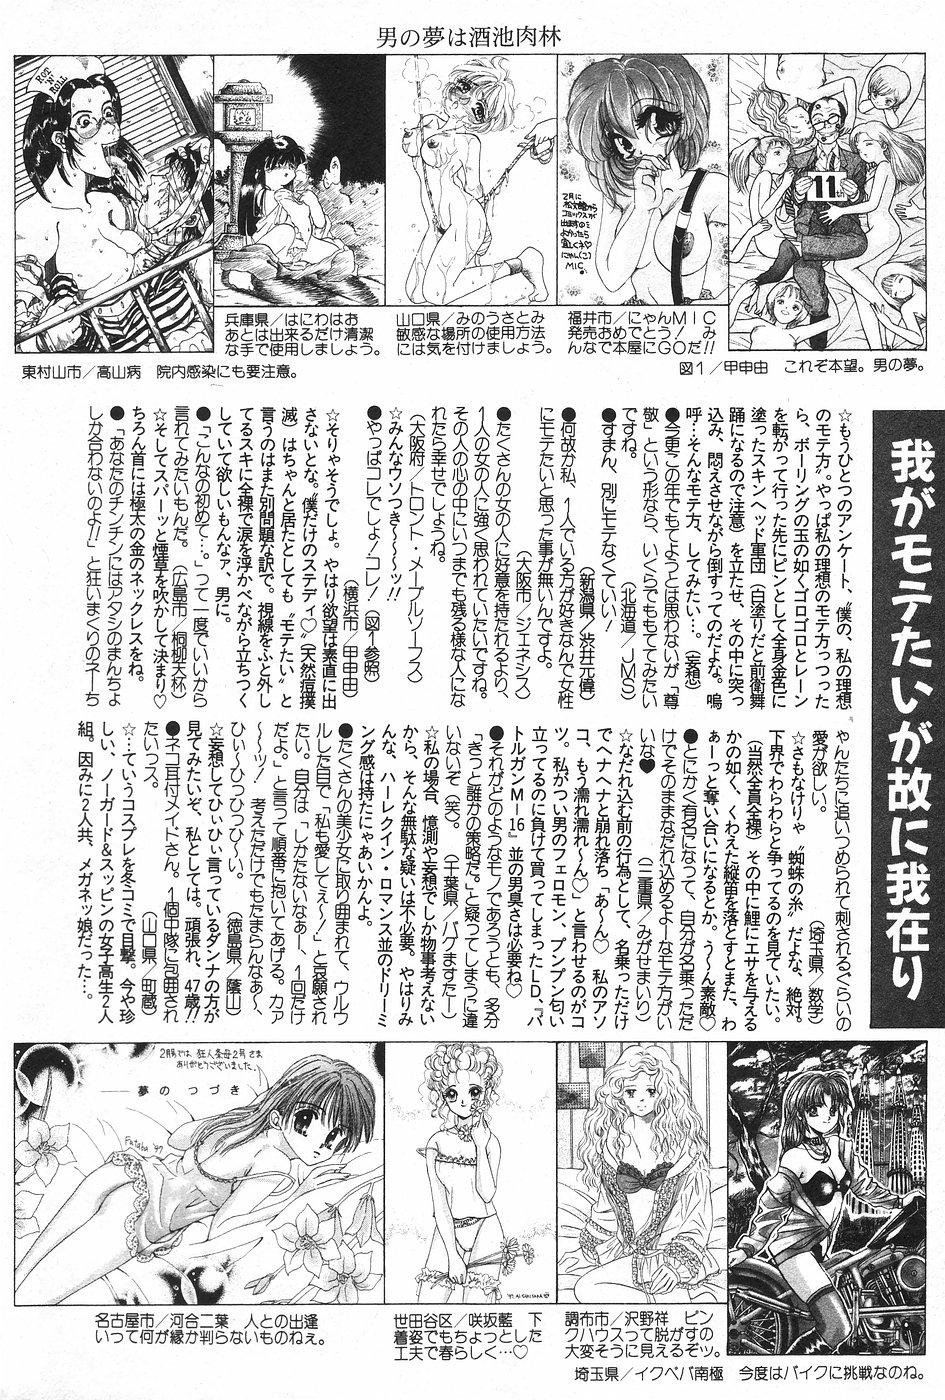 Manga Hotmilk 1997-04 156